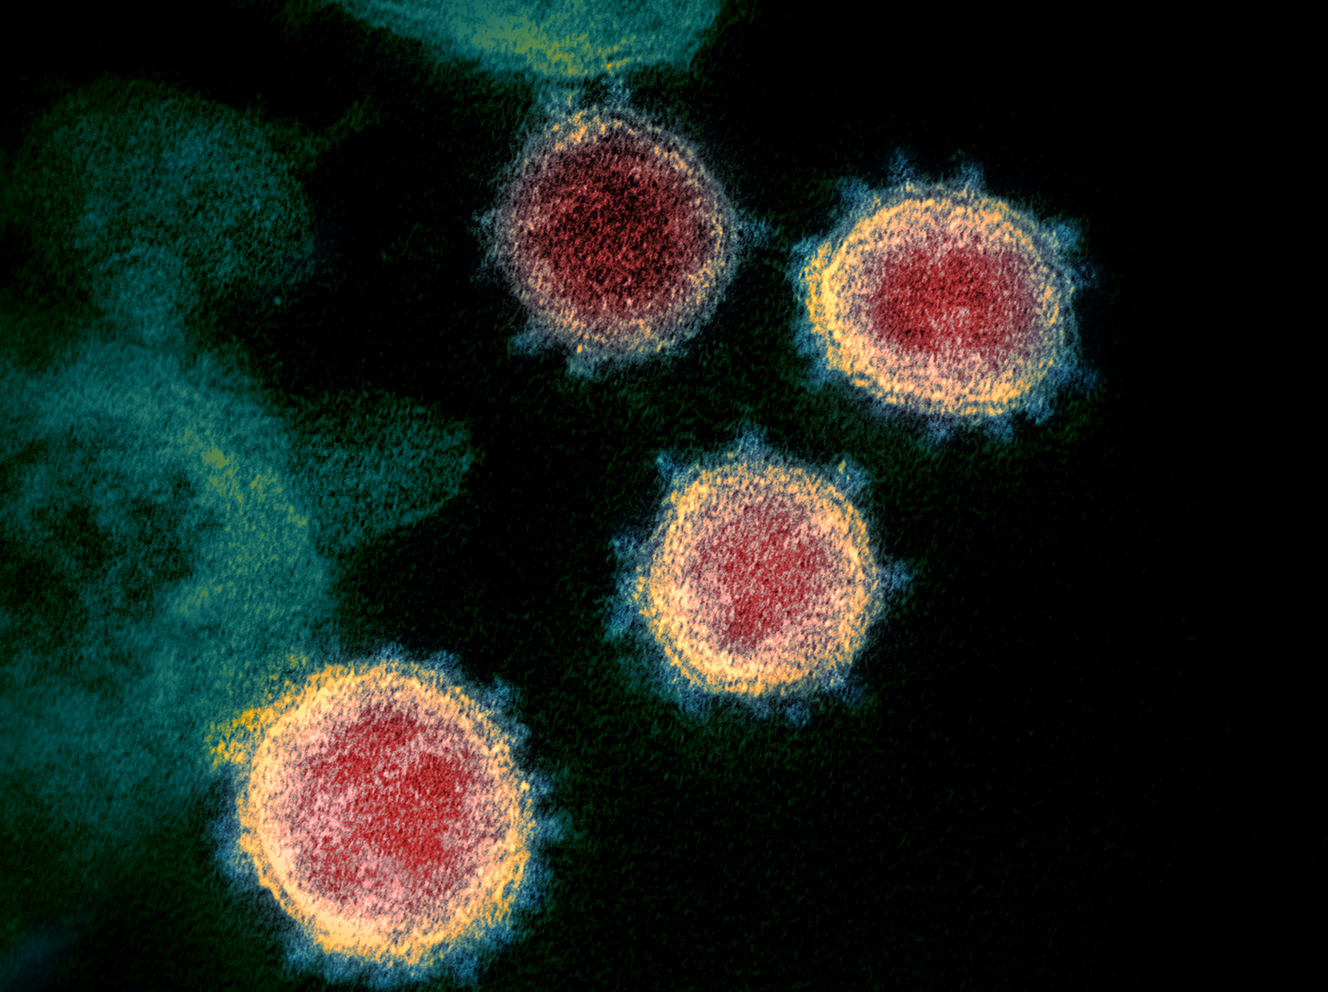 SARS-CoV-2 cells as seen under an electron microscope. (Photo courtesy of NIAID)